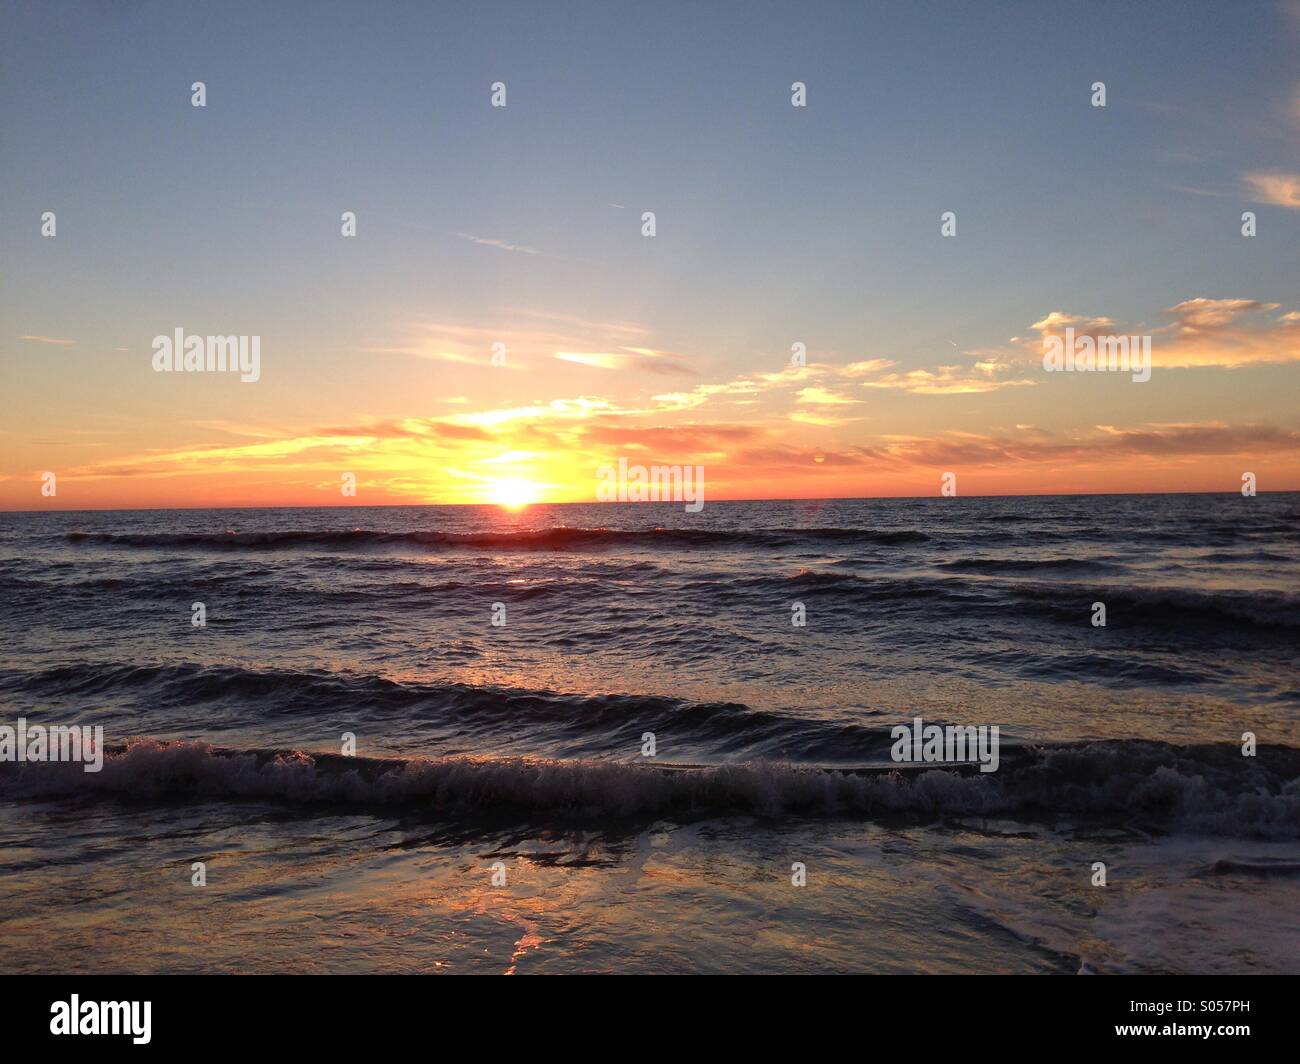 Sun setting over the ocean. Stock Photo